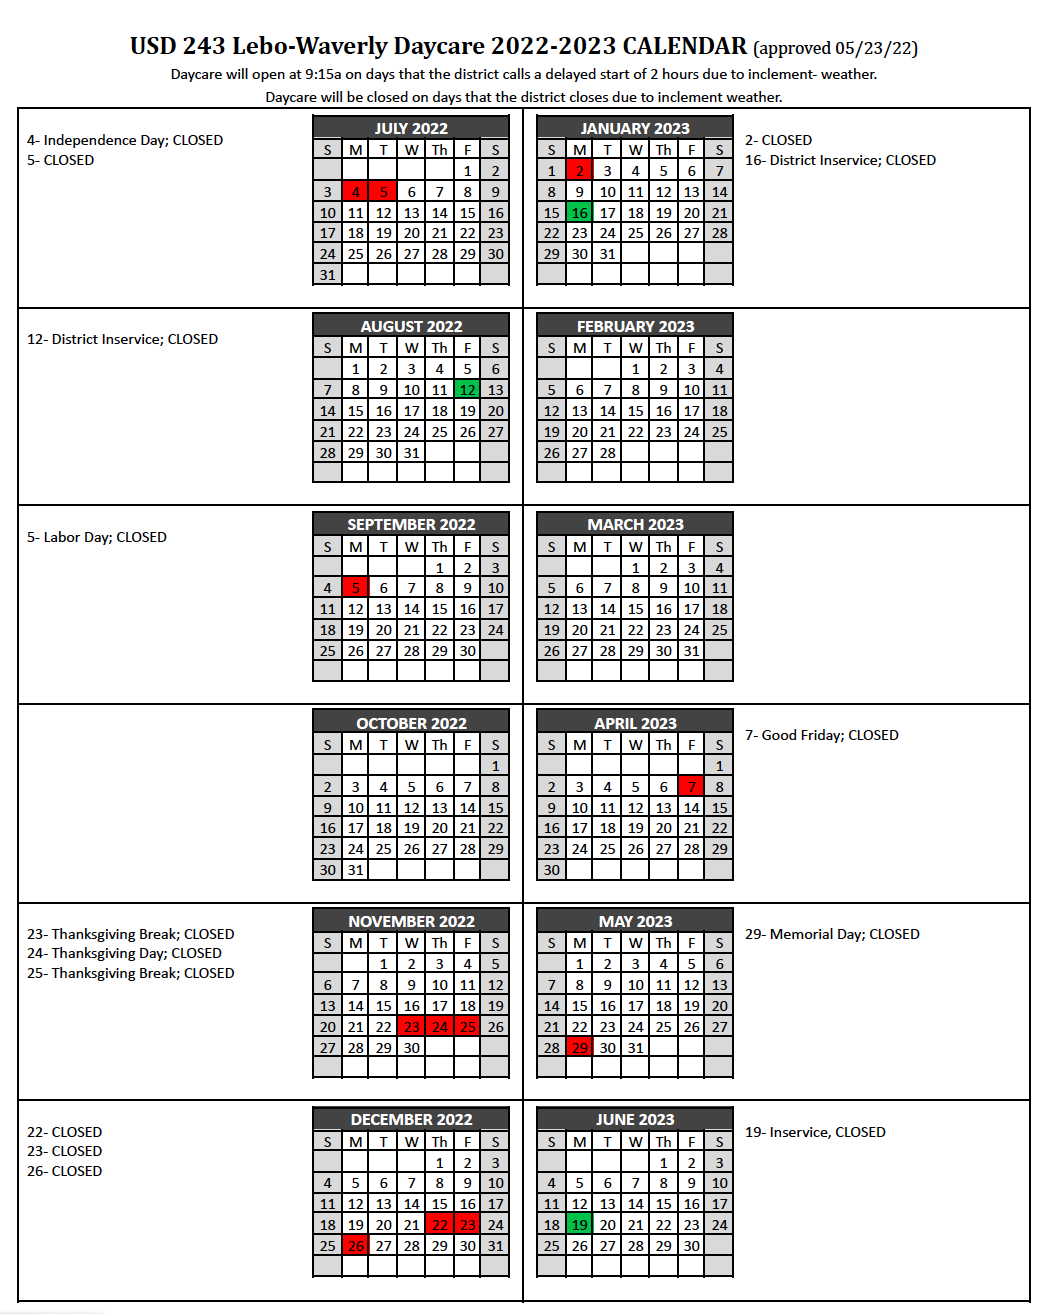 USD243 Daycare 2022-23 Calendar